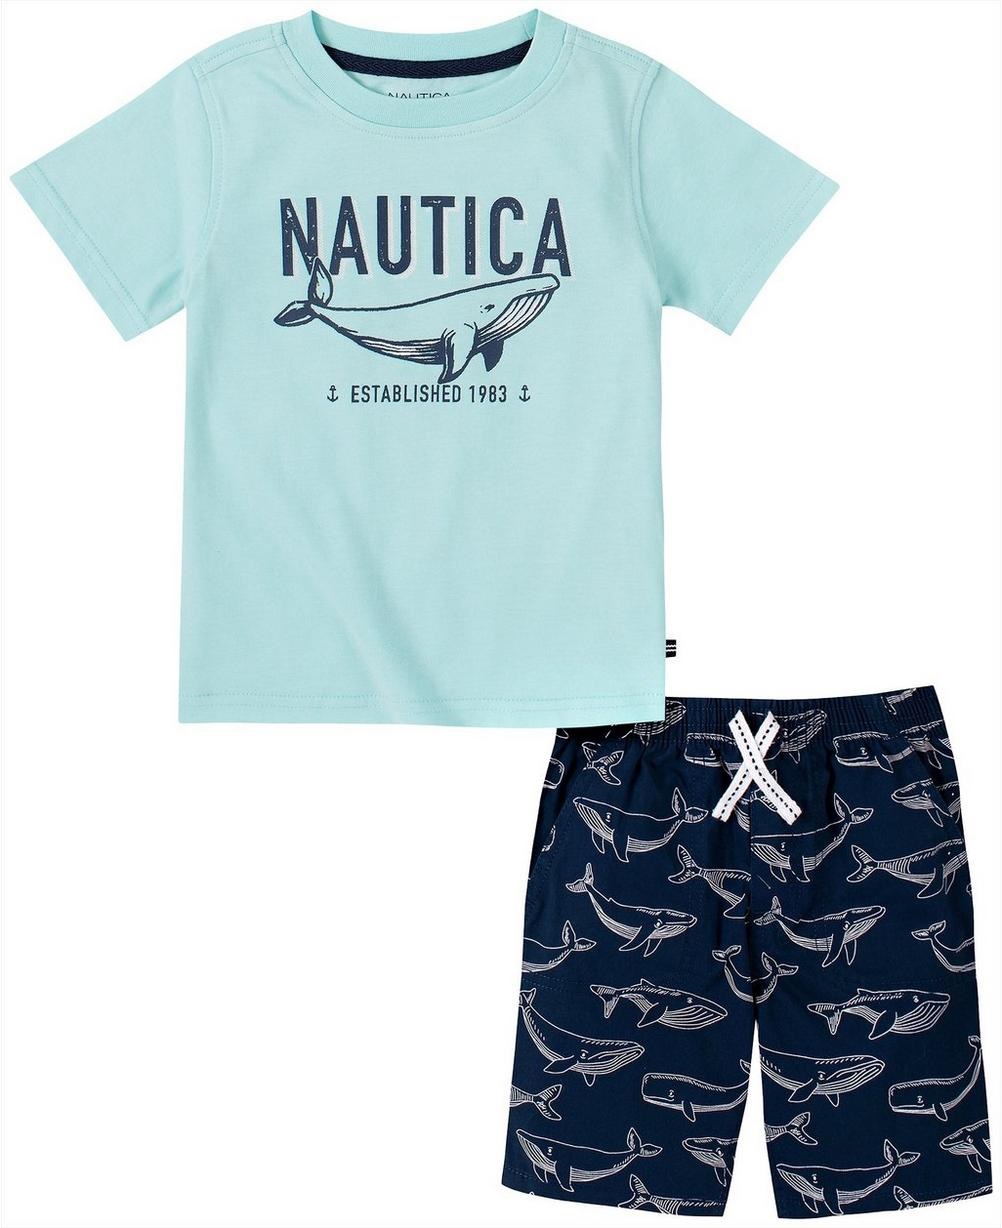 Nautica Sets KHQ Boys Toddler 2 Pieces Shirt Shorts Set 